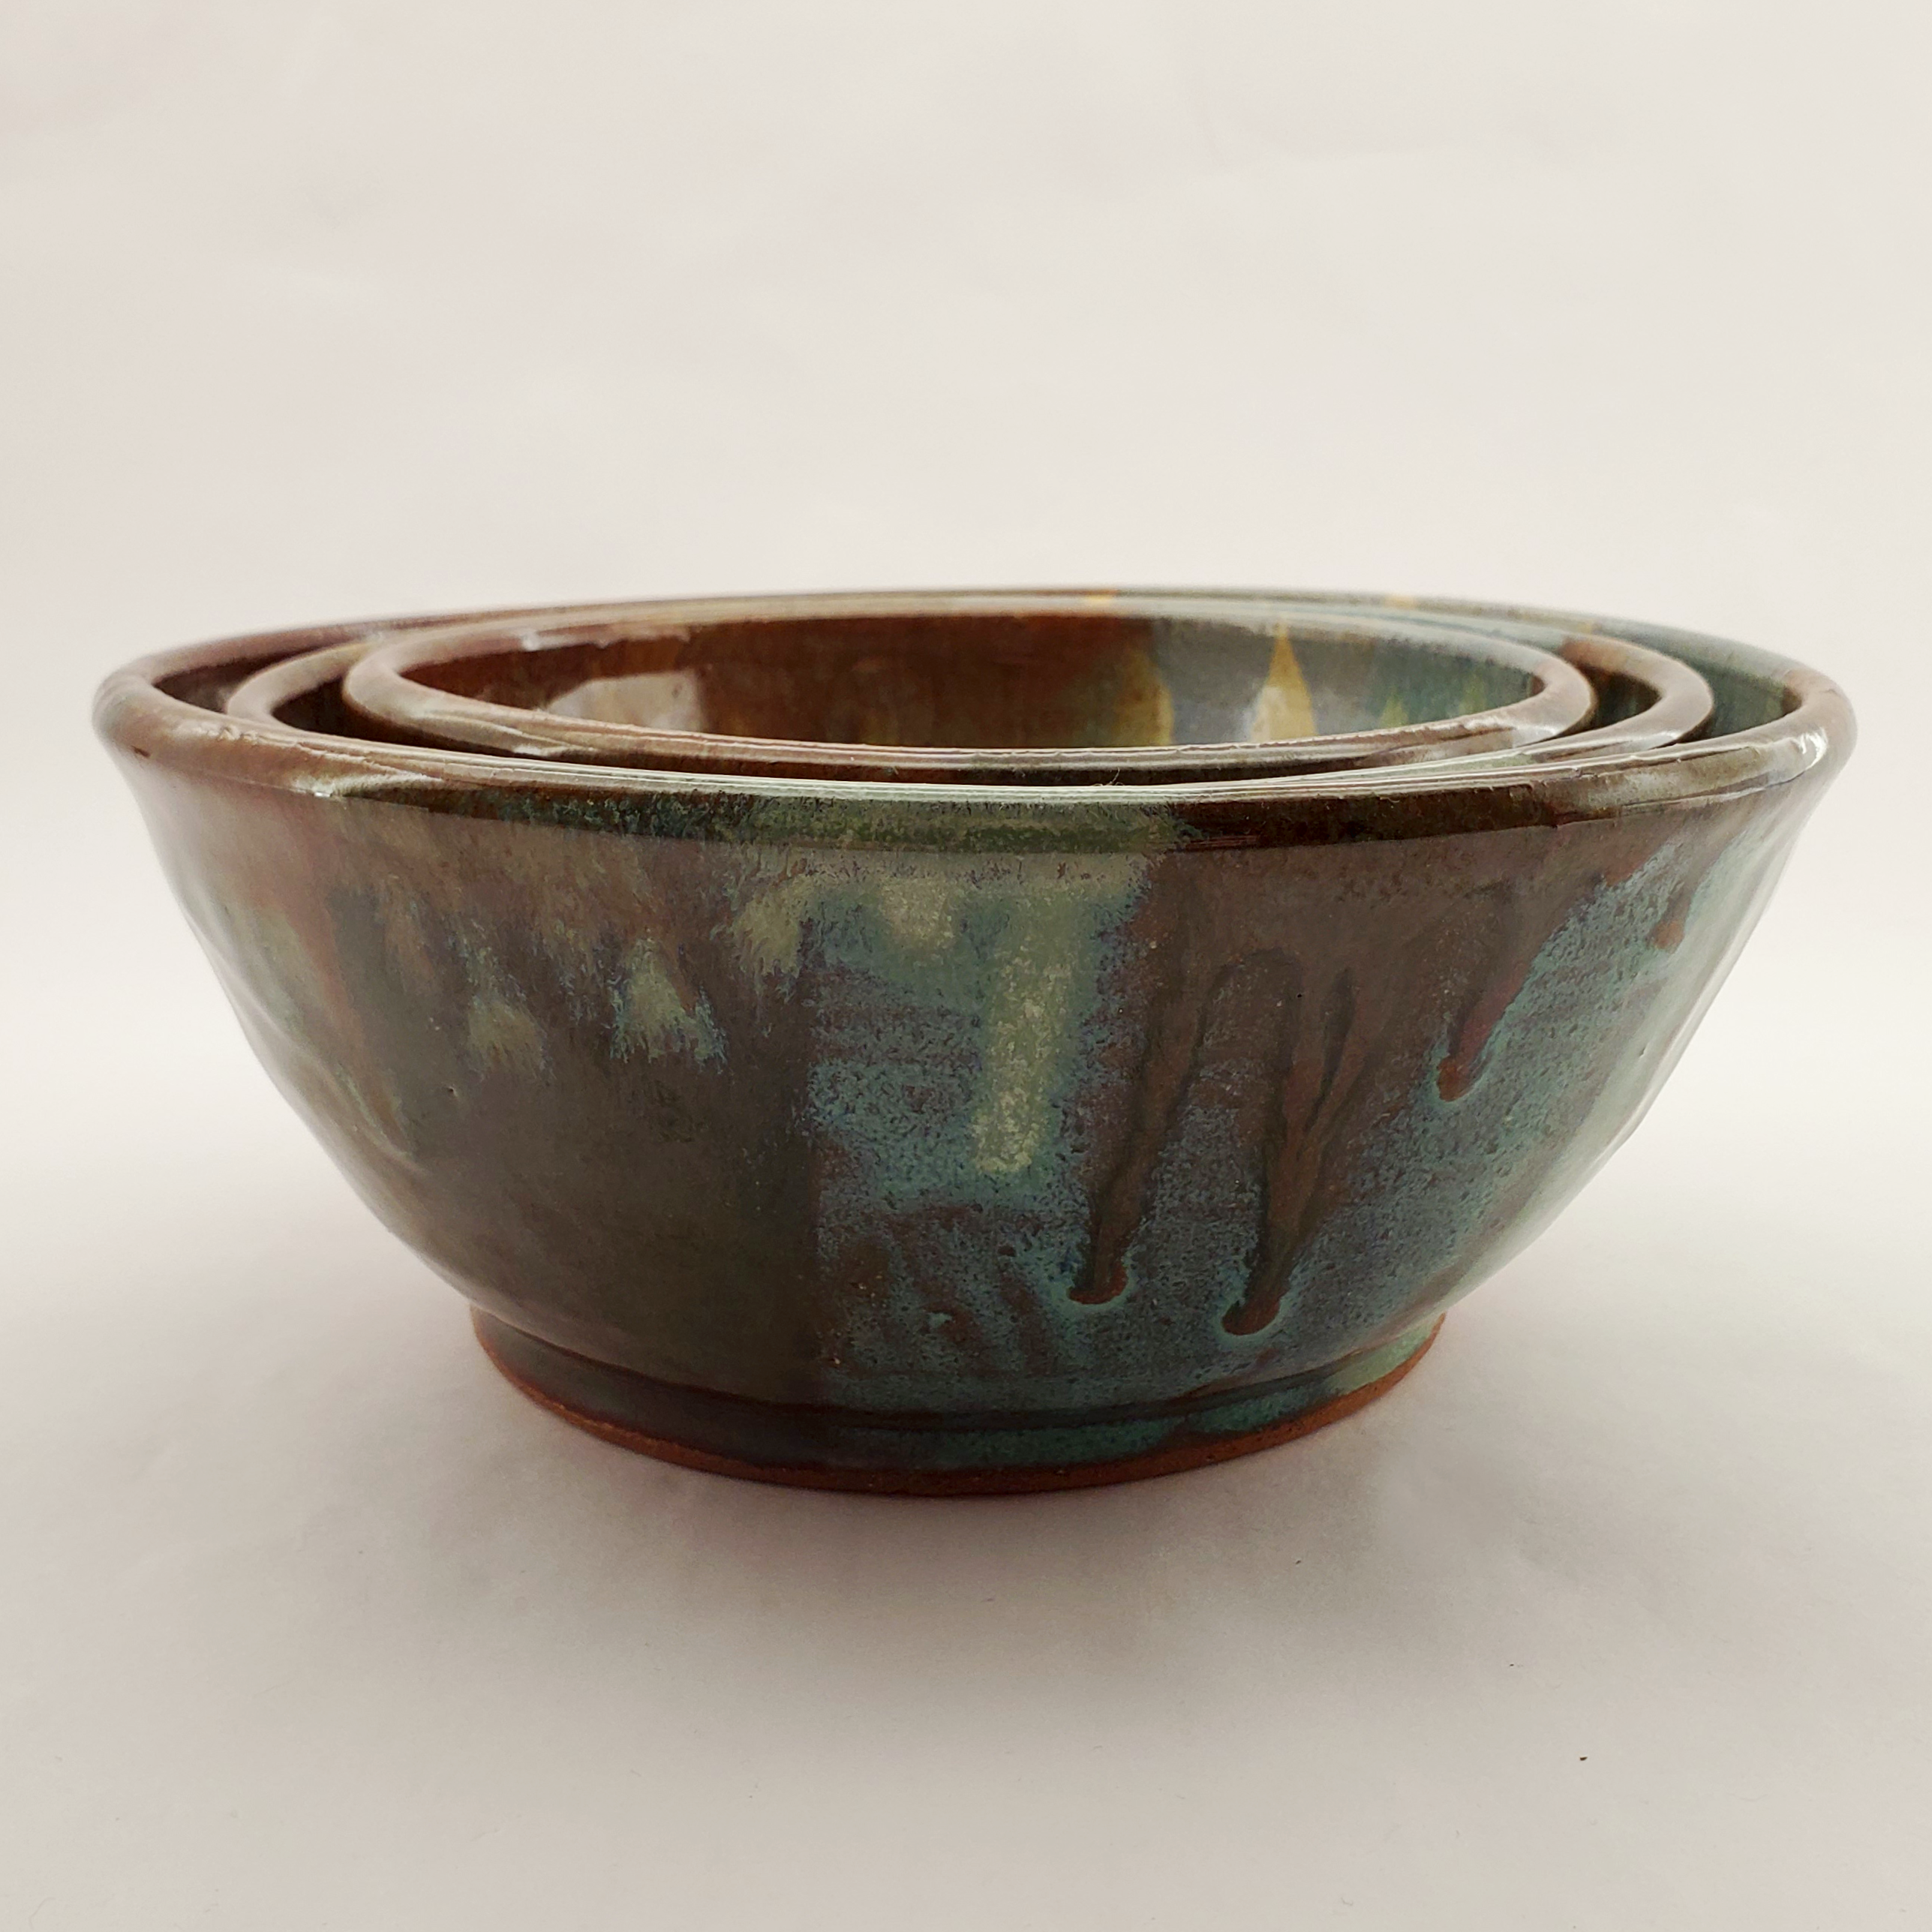 Beautiful set of nesting bowls glazed in earthy tones and colors. Handmade on Vashon Island by Abraham McBride Pottery. Local ceramics artist, Seattle Washington.